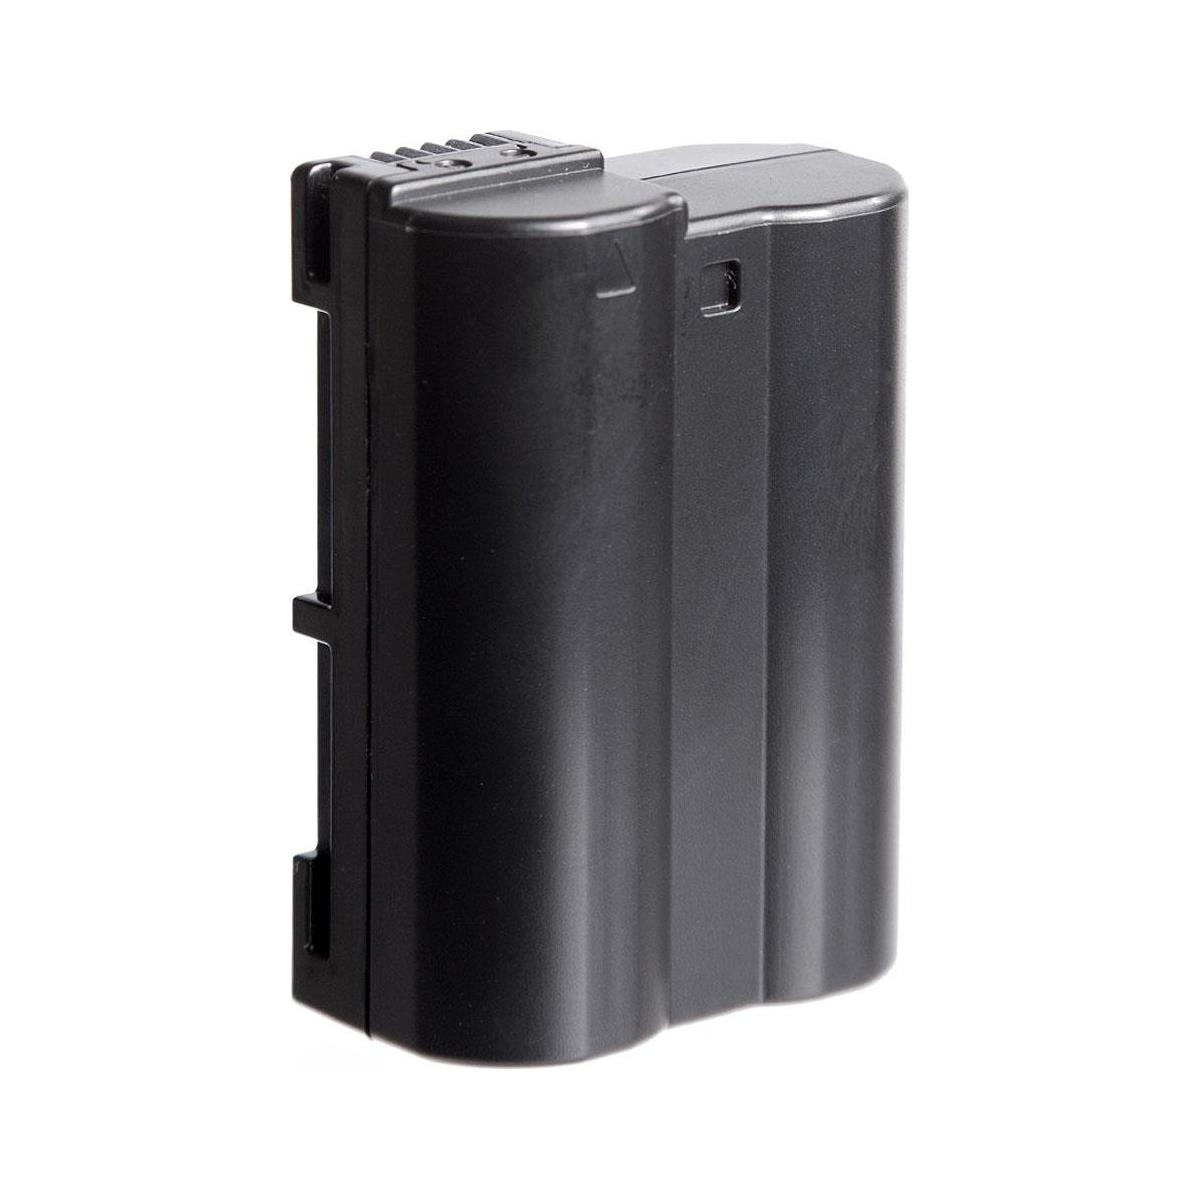 Image of Ikan EN-EL15 7.4V 1600mAh Rechargeable Lithium-Ion Battery for Nikon Cameras